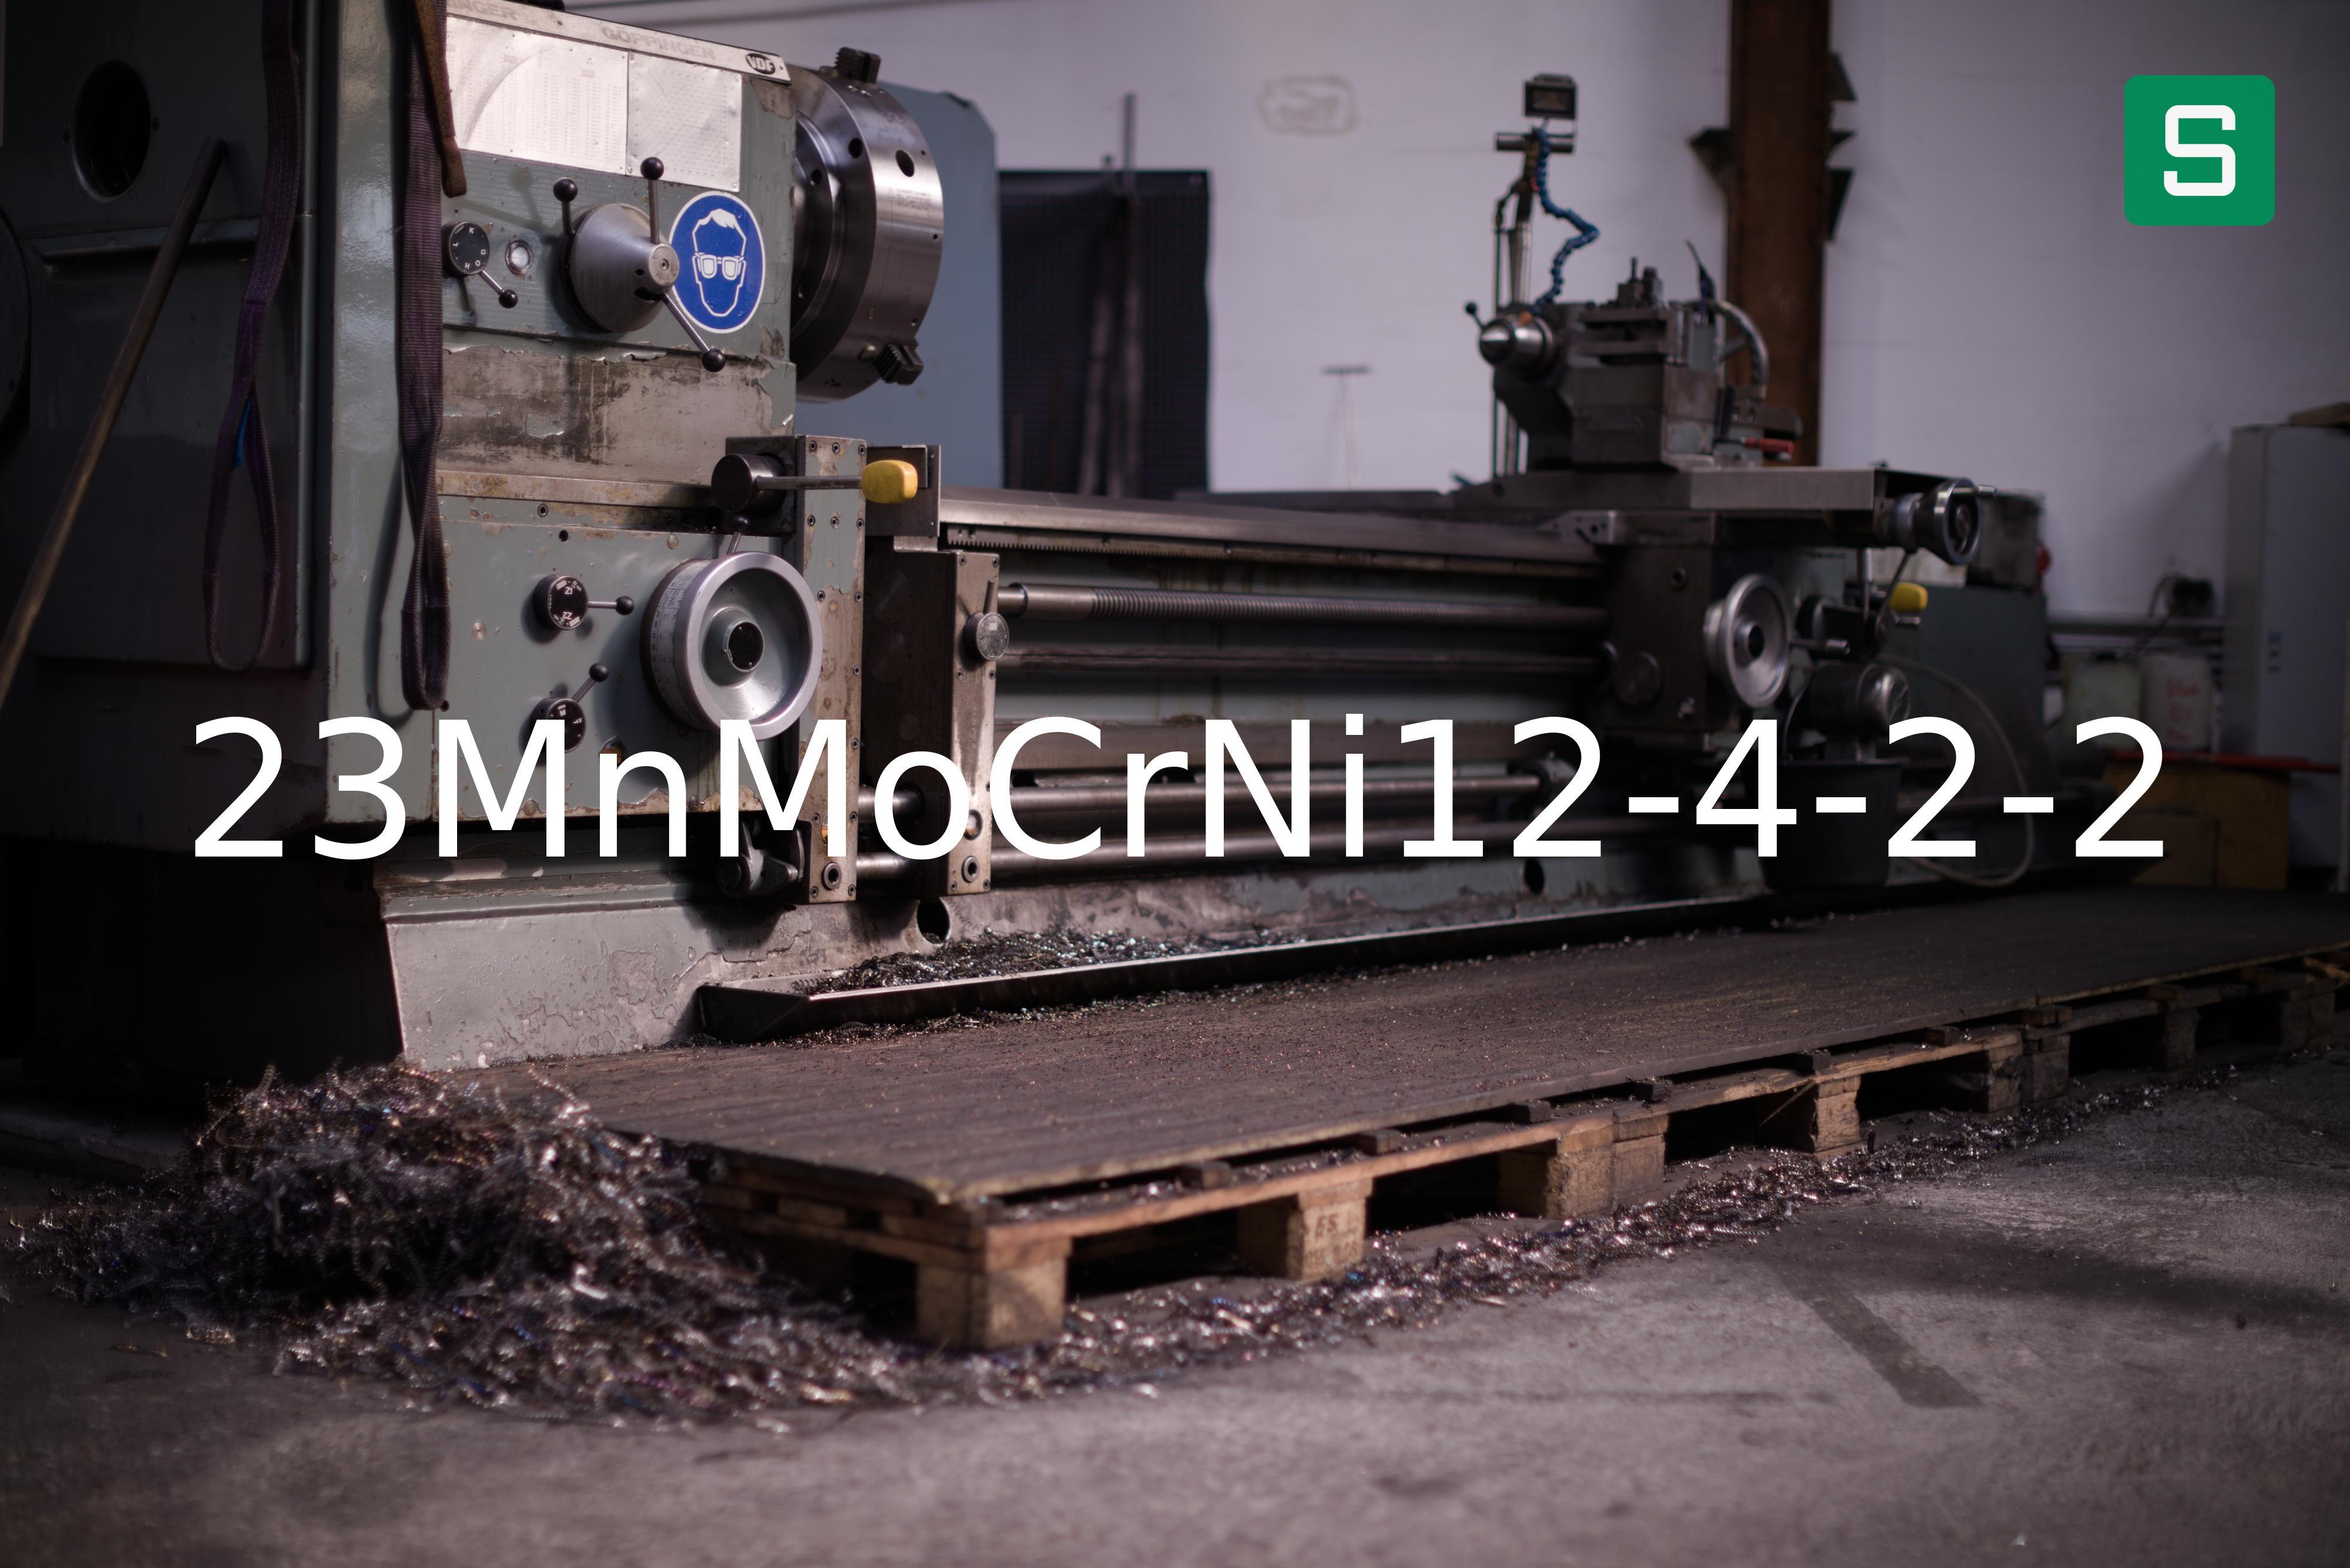 Steel Material: 23MnMoCrNi12-4-2-2